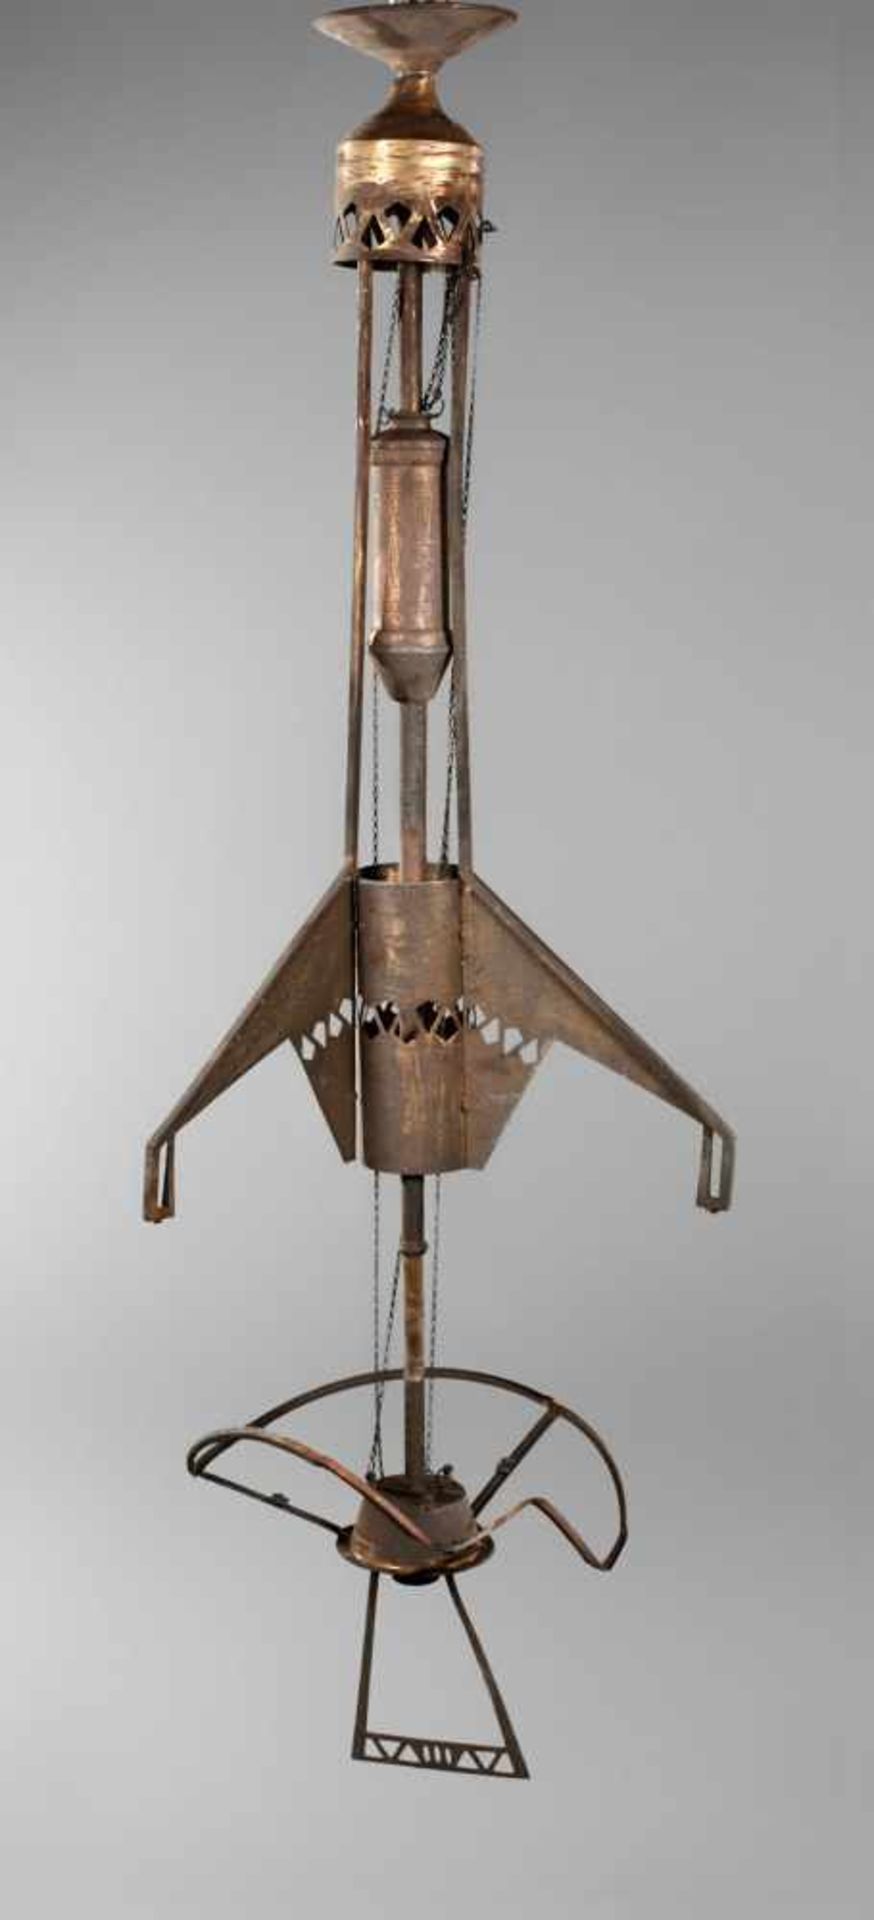 Deckenlampe Jugendstil Ausführung wohl K. M. Seifert Dresden, um 1900, schlankes Messinggestell